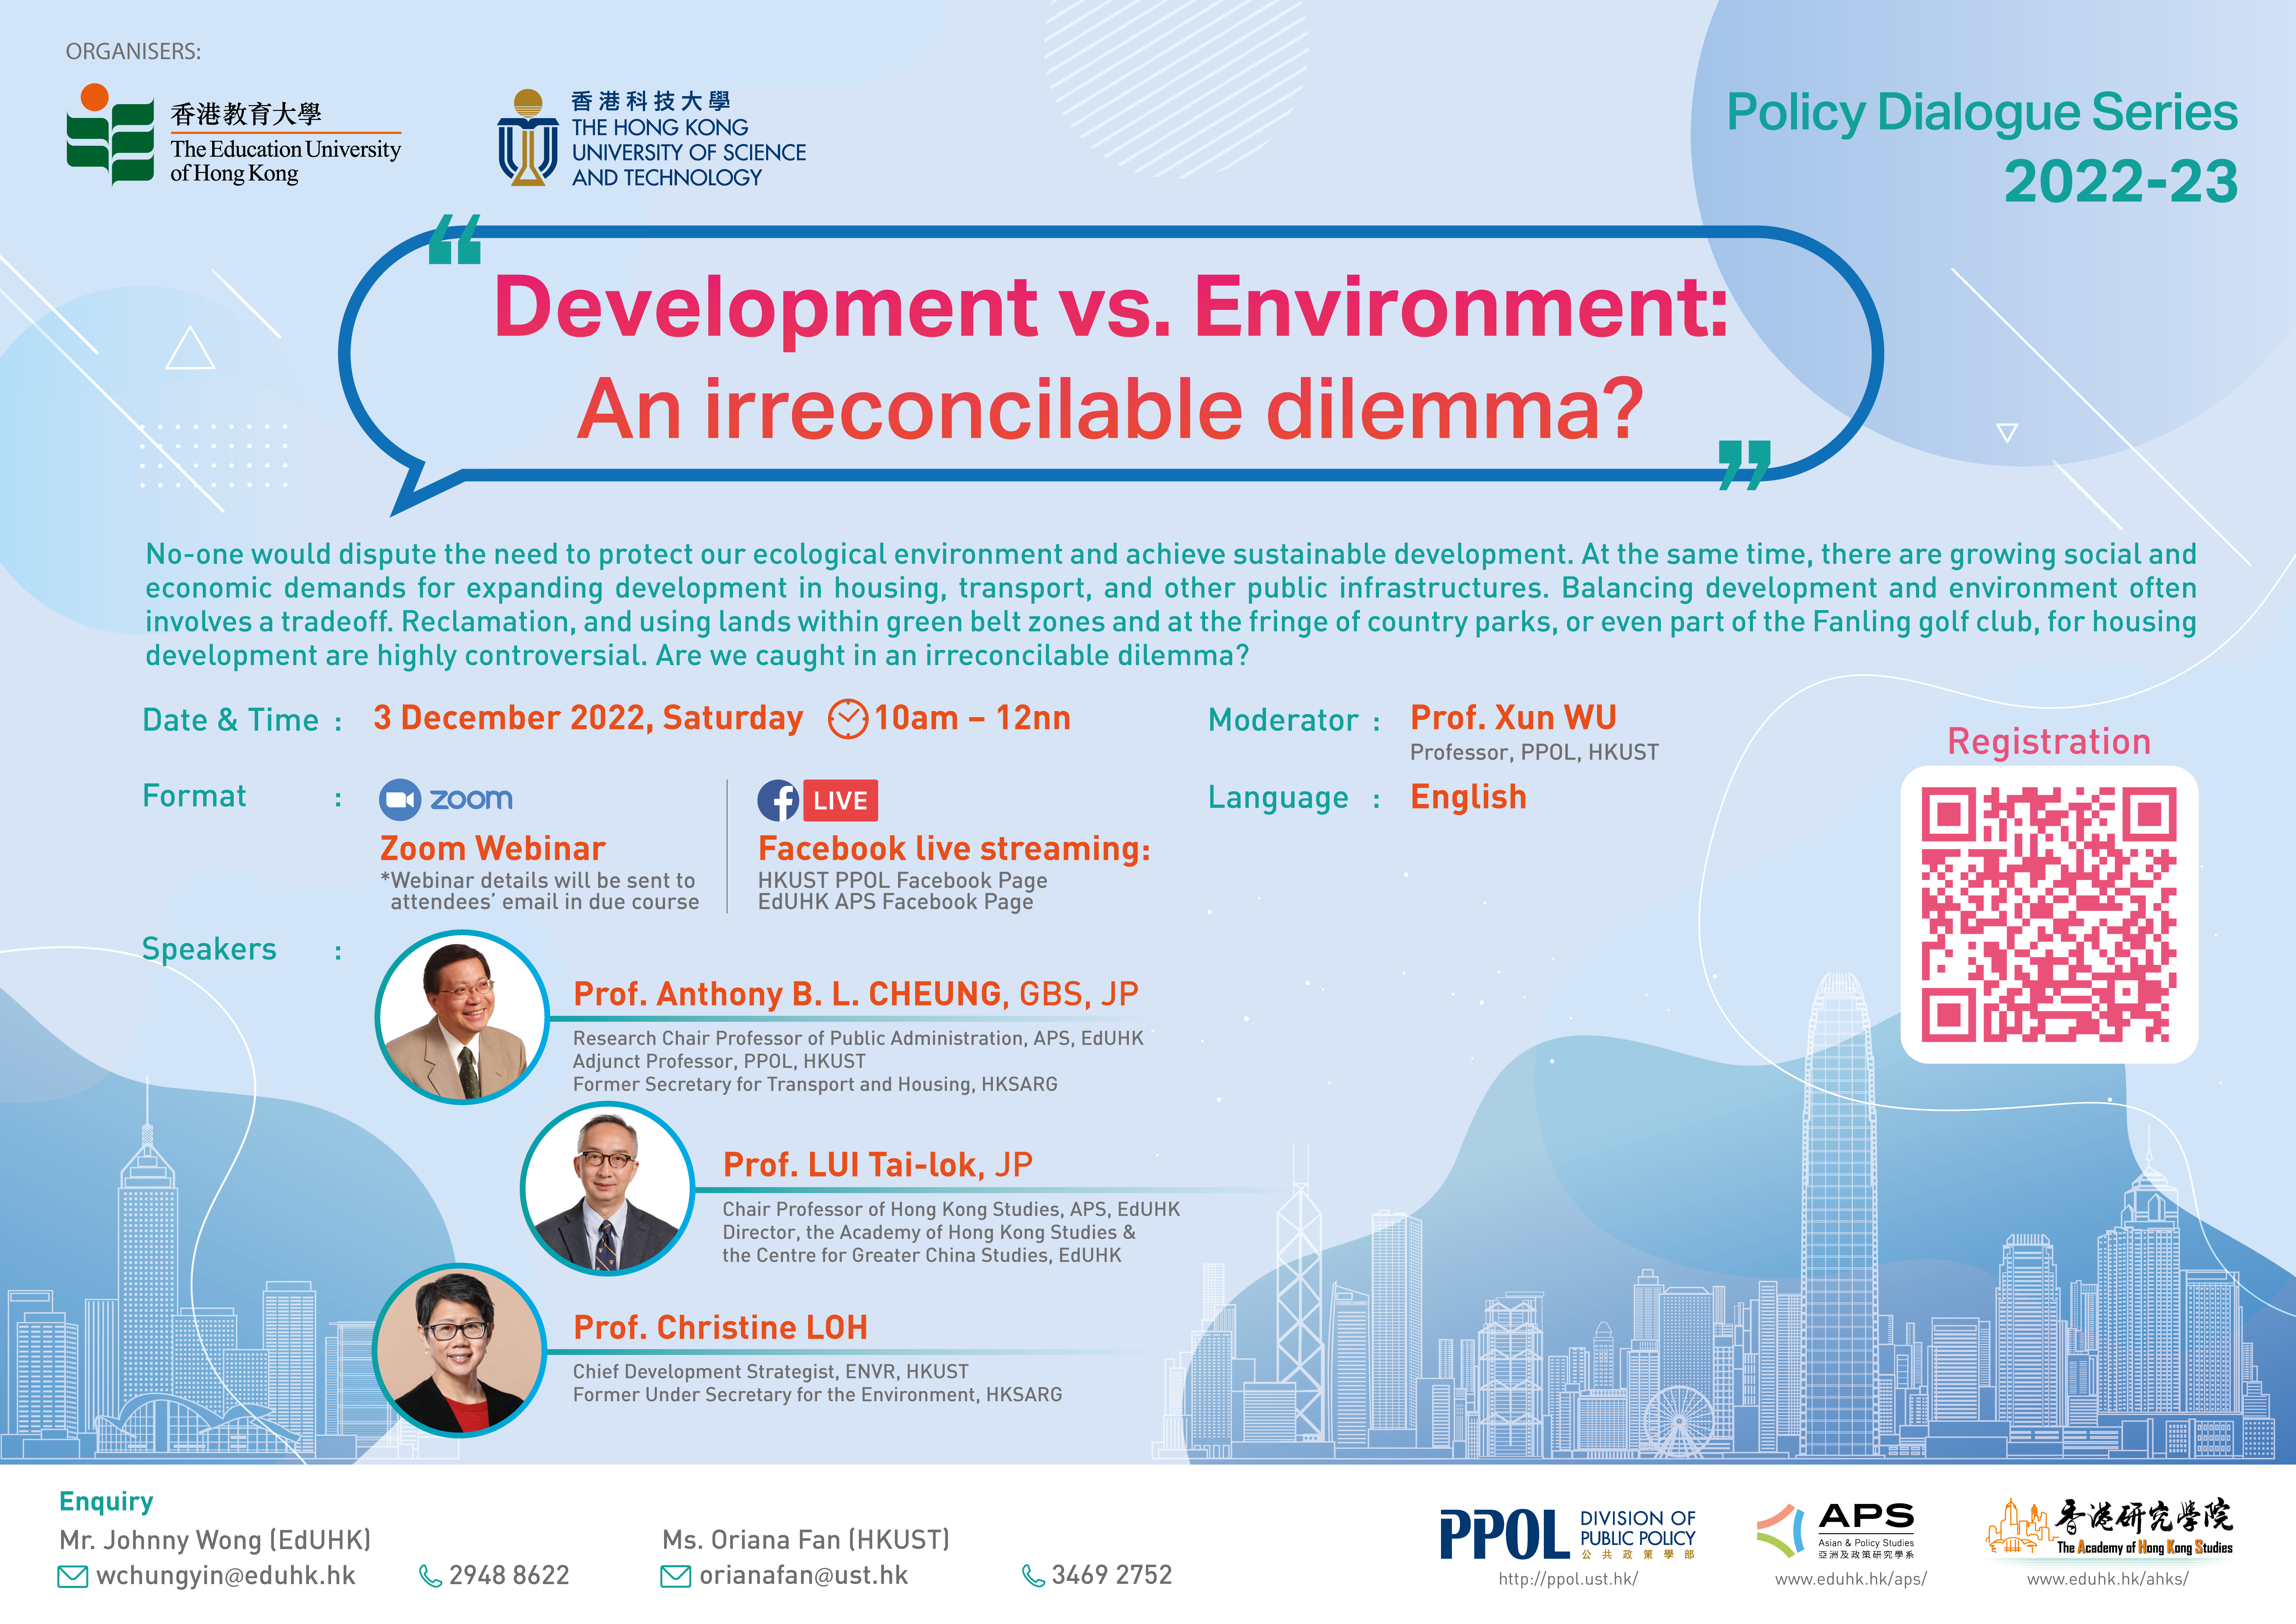 Development vs. Environment: An irreconcilable dilemma?